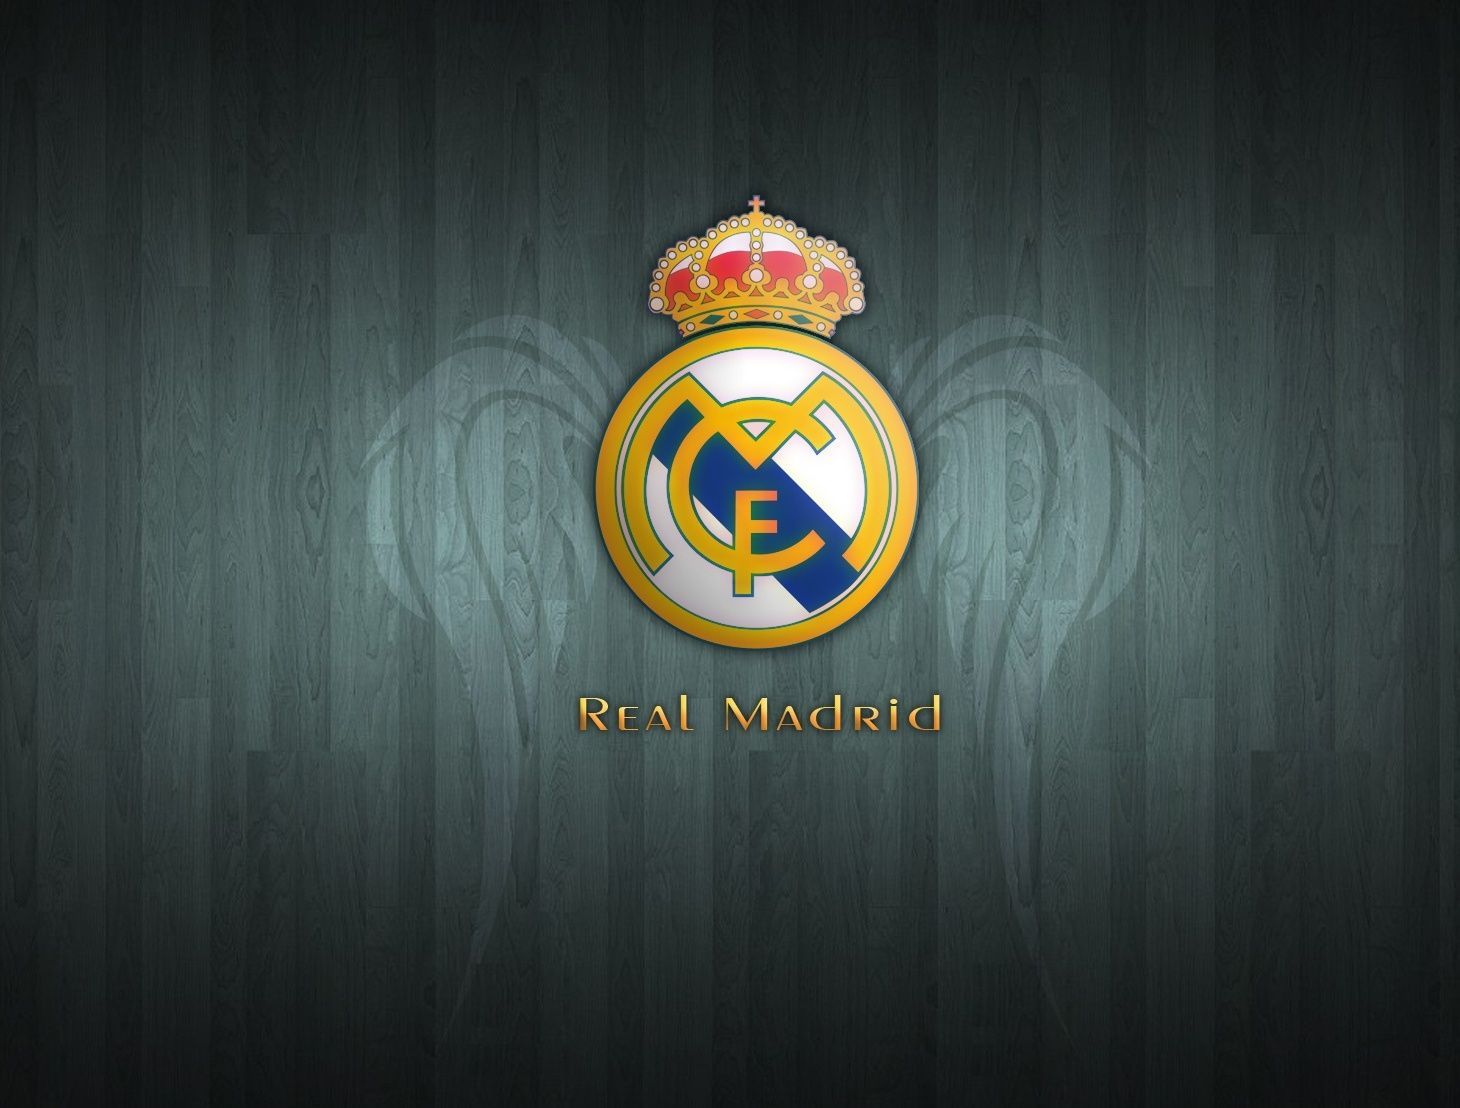 Real Madrid Club De Fútbol Madrid España Wallpaper